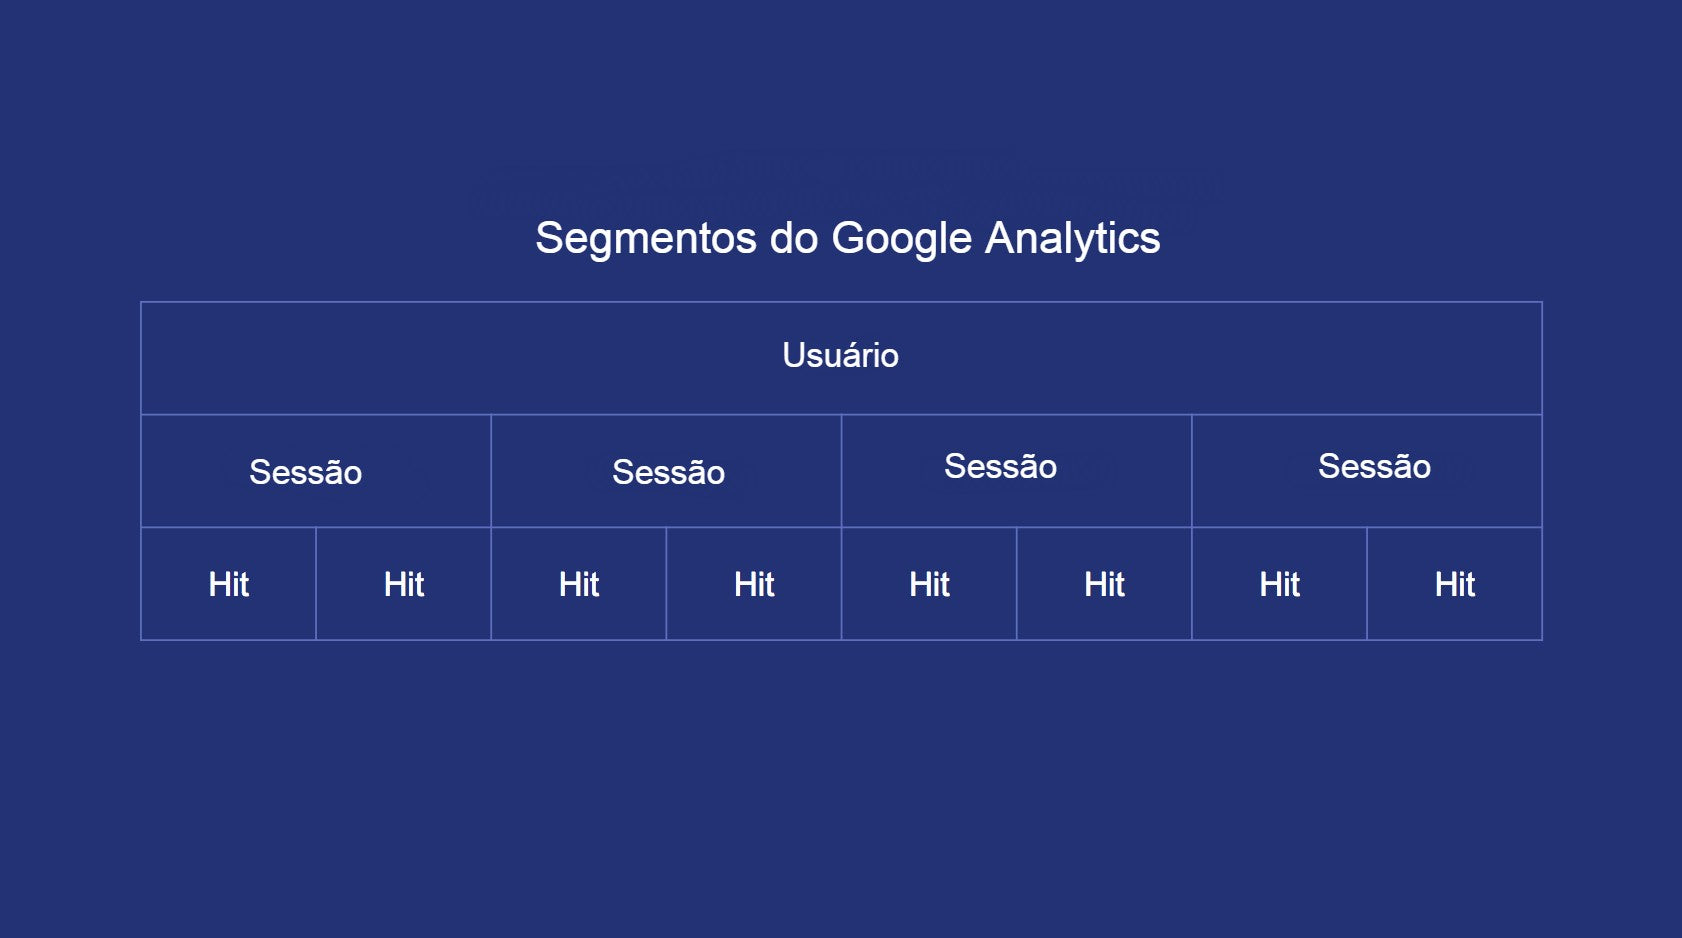 Como usar Google Analytics: Segmentos de usuário, segmentos de sessão e segmentos de hit